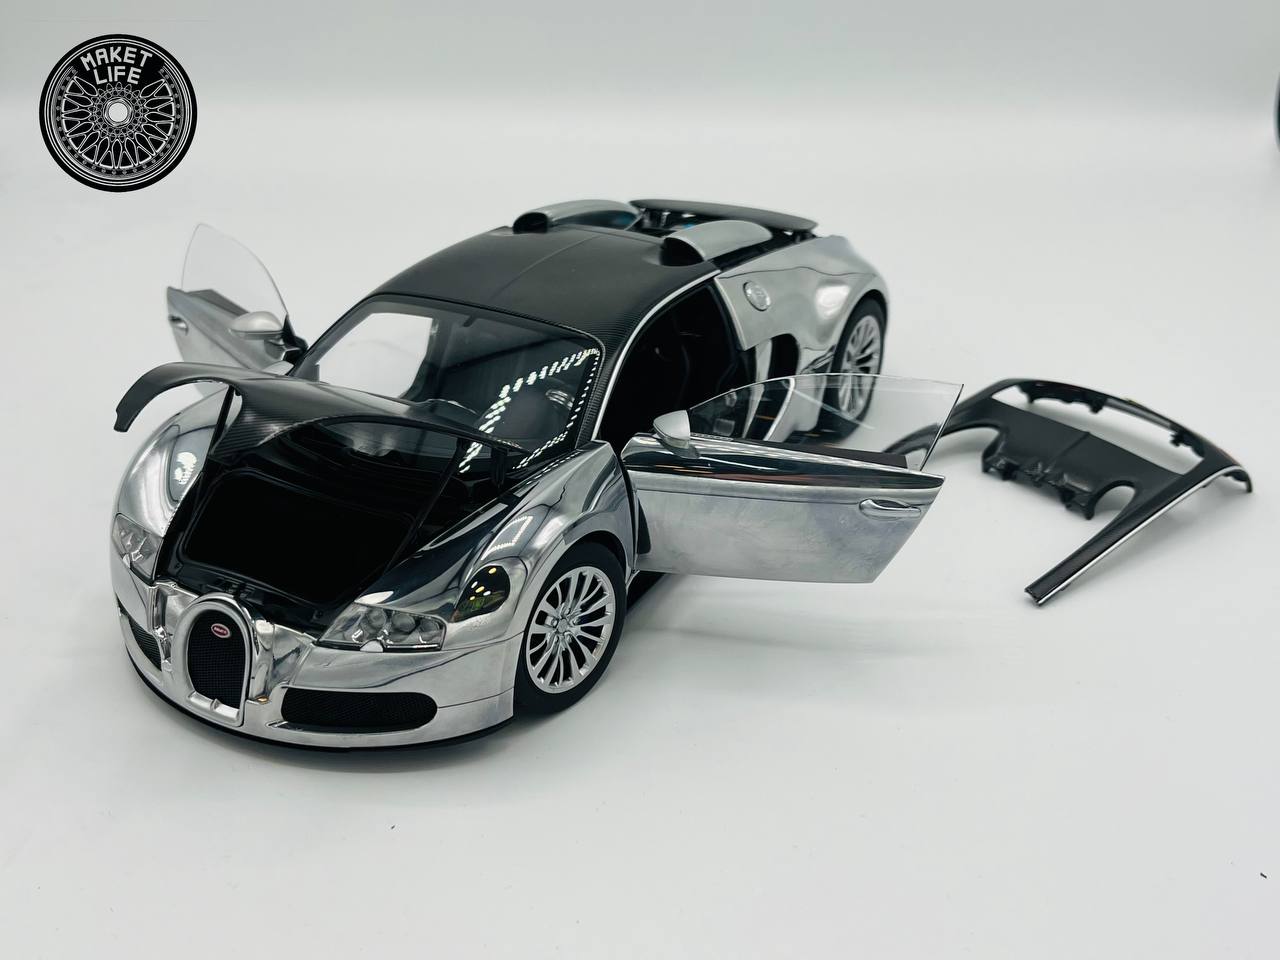  Bugatti Veyron 16.4 Pur Sang